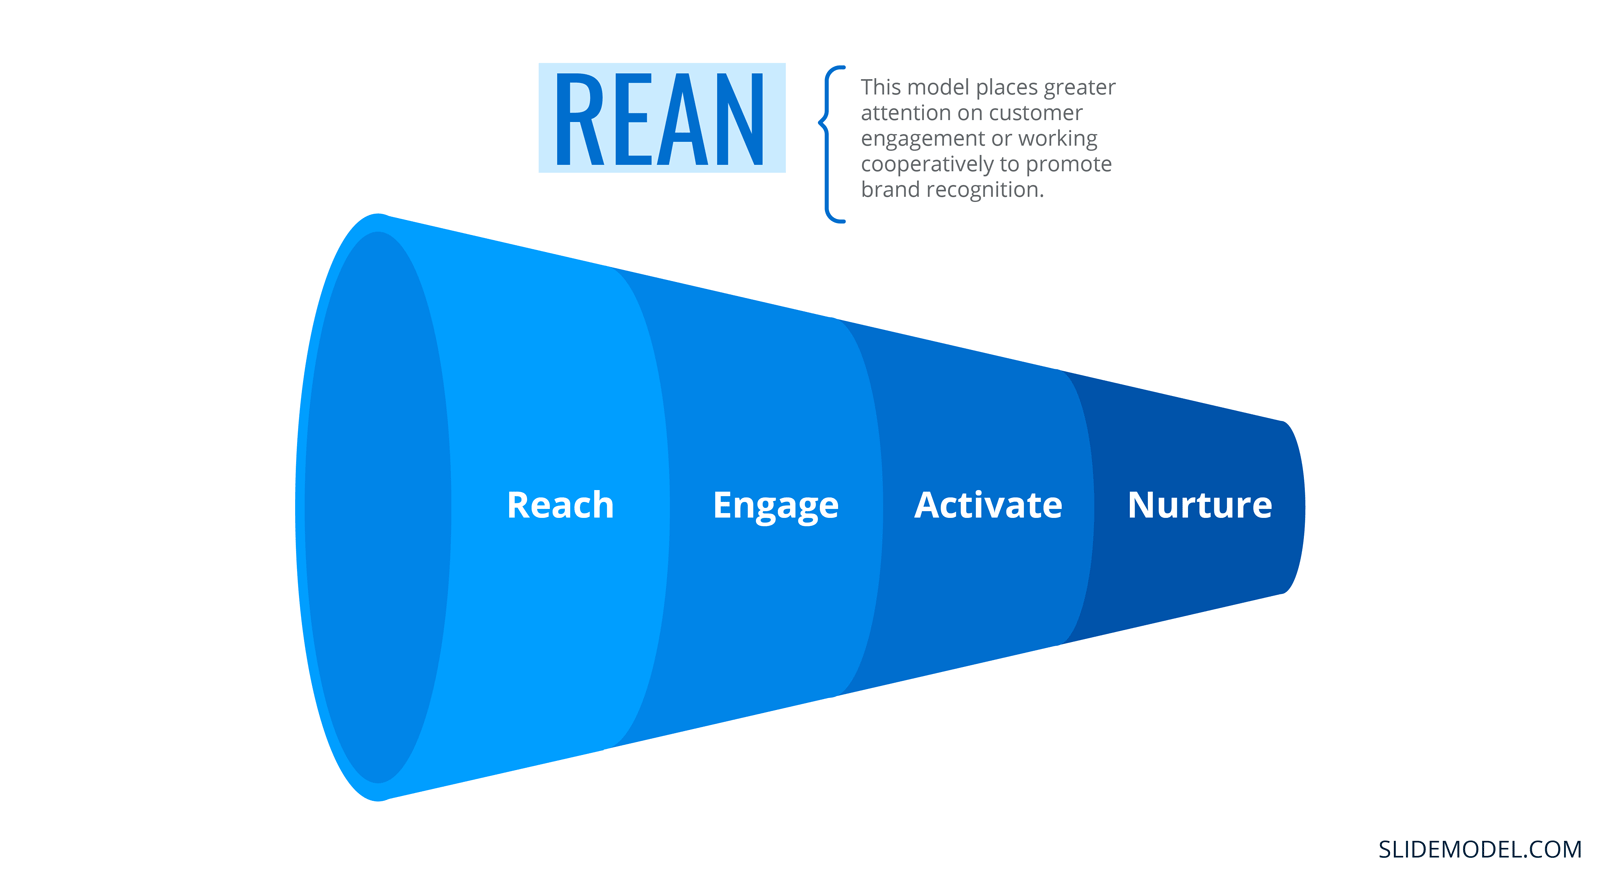 REAN Model Alternative to AIDA